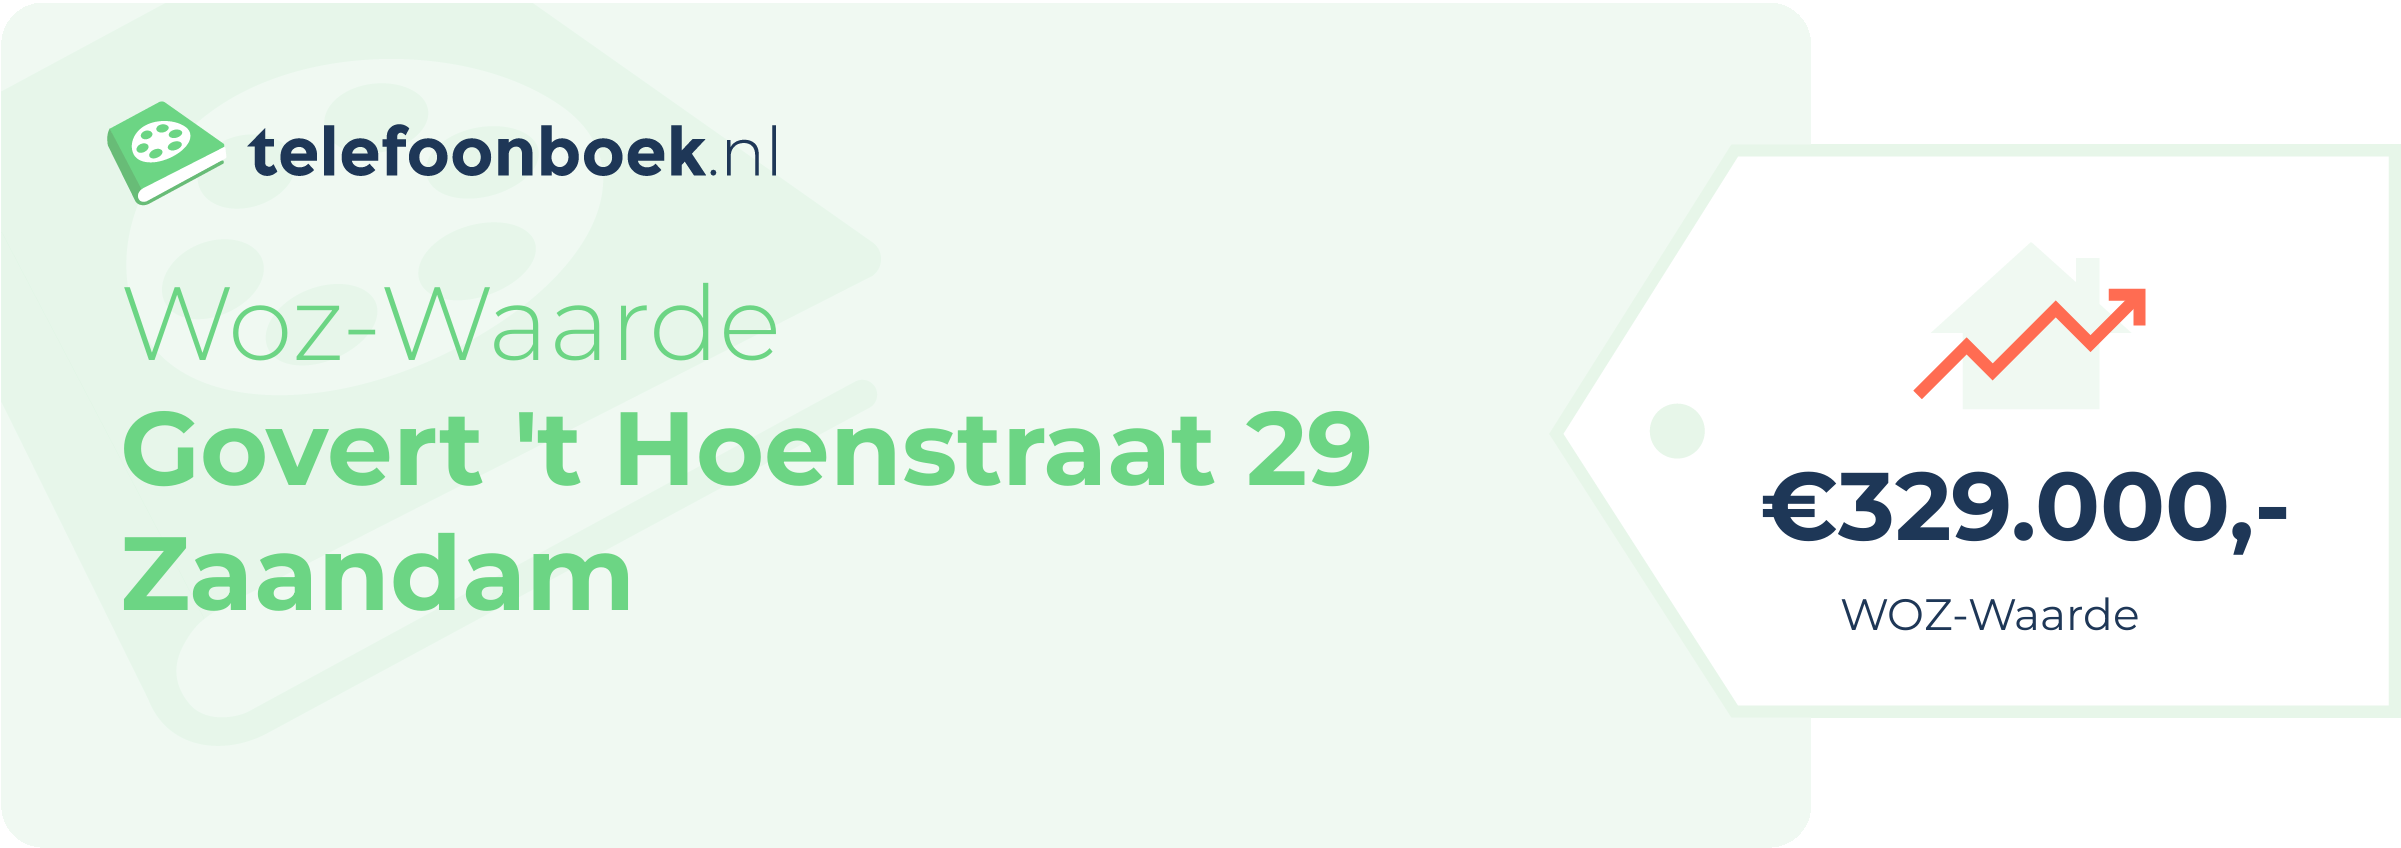 WOZ-waarde Govert 't Hoenstraat 29 Zaandam